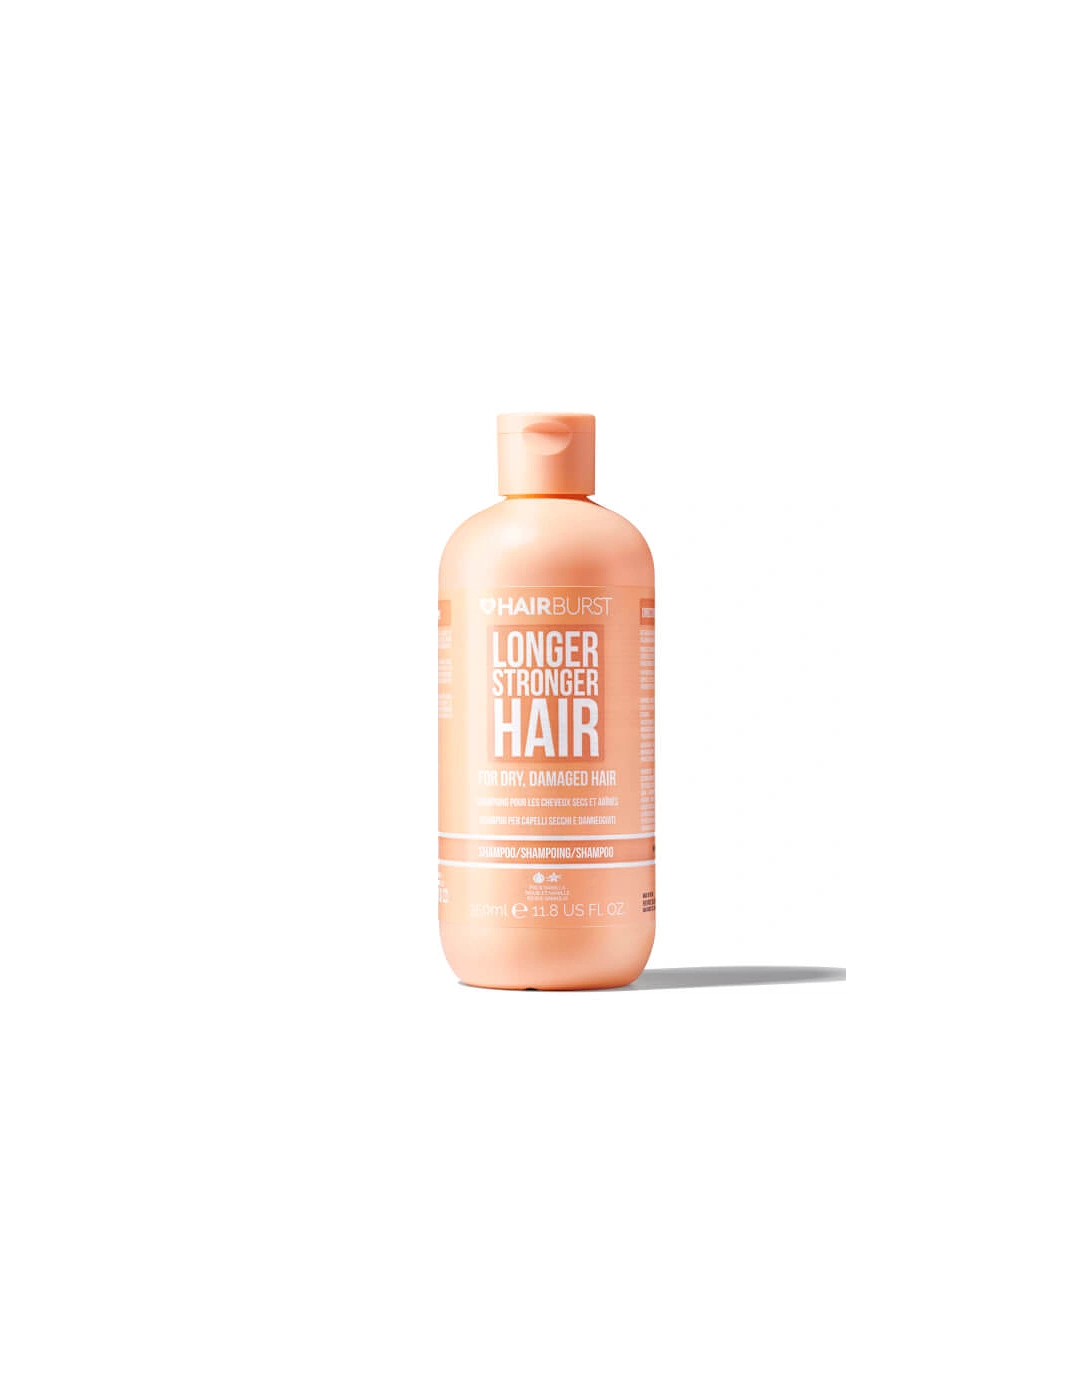 Shampoo for Dry, Damaged Hair 350ml, 2 of 1